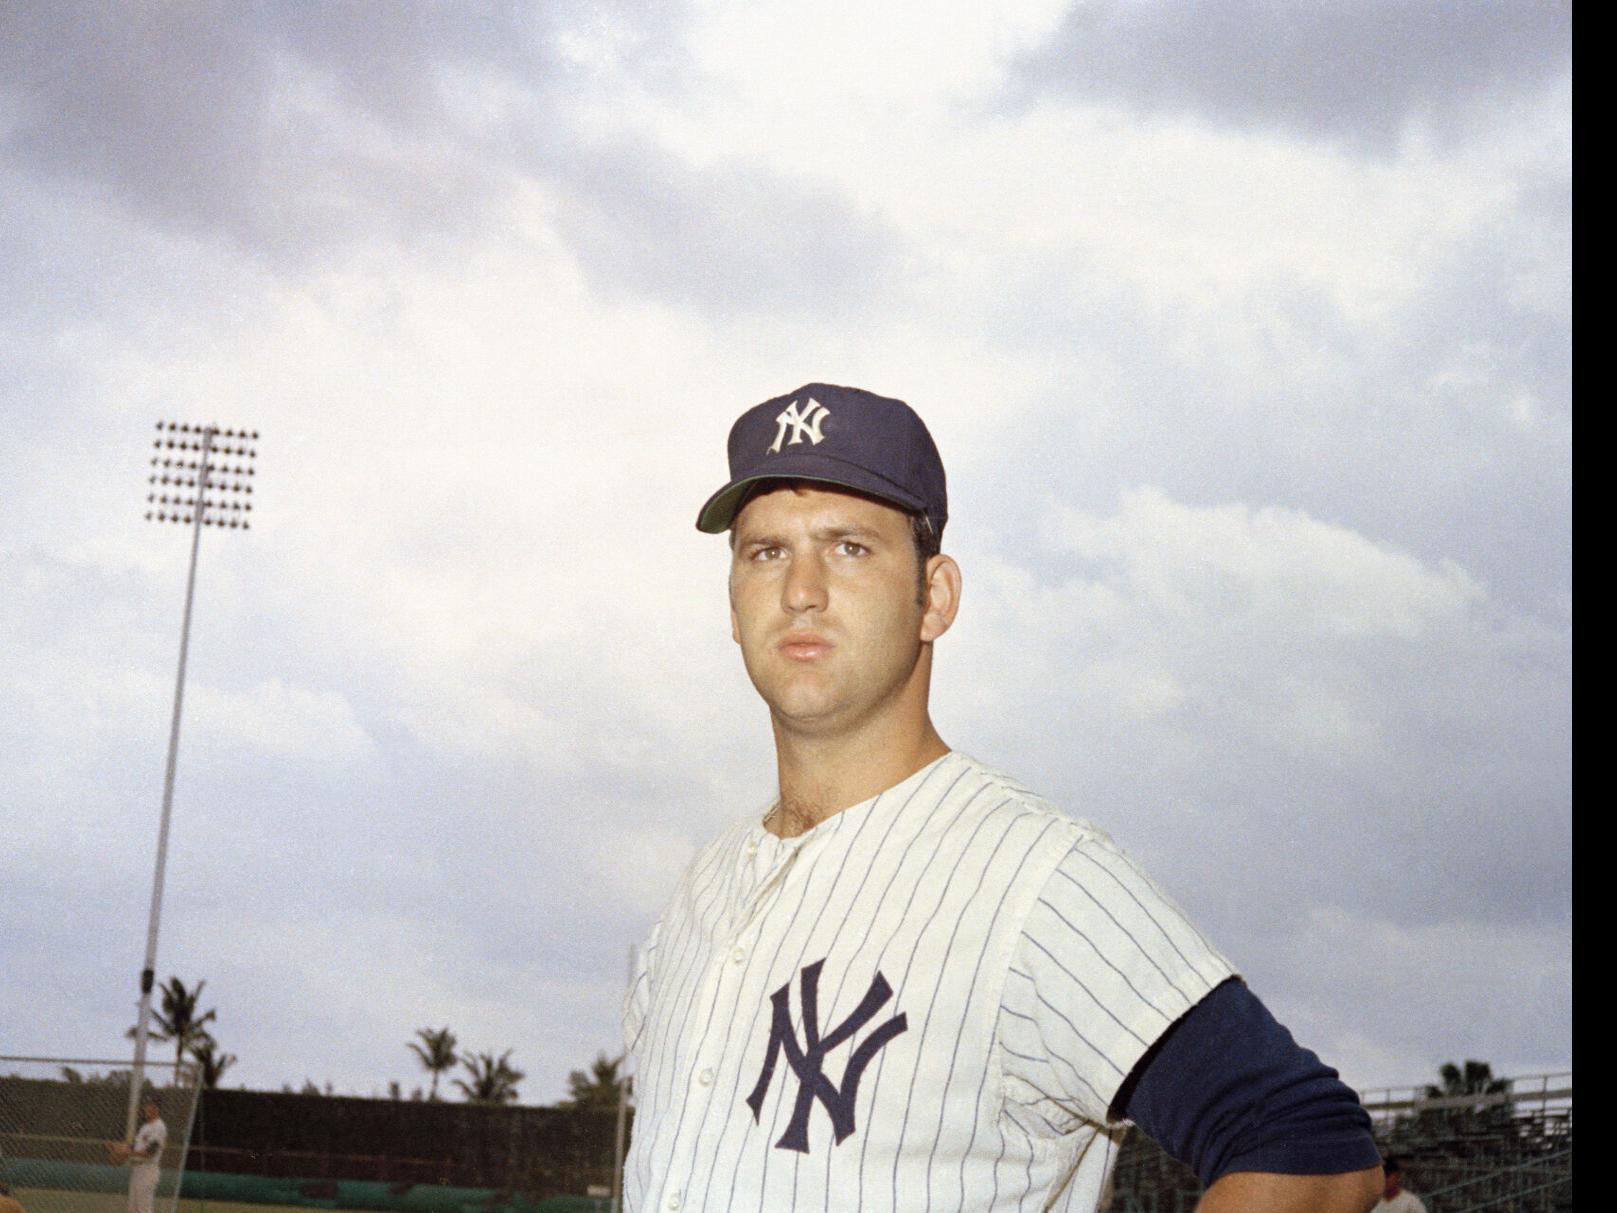 MAJESTIC  THURMAN MUNSON New York Yankees 1969 Cooperstown